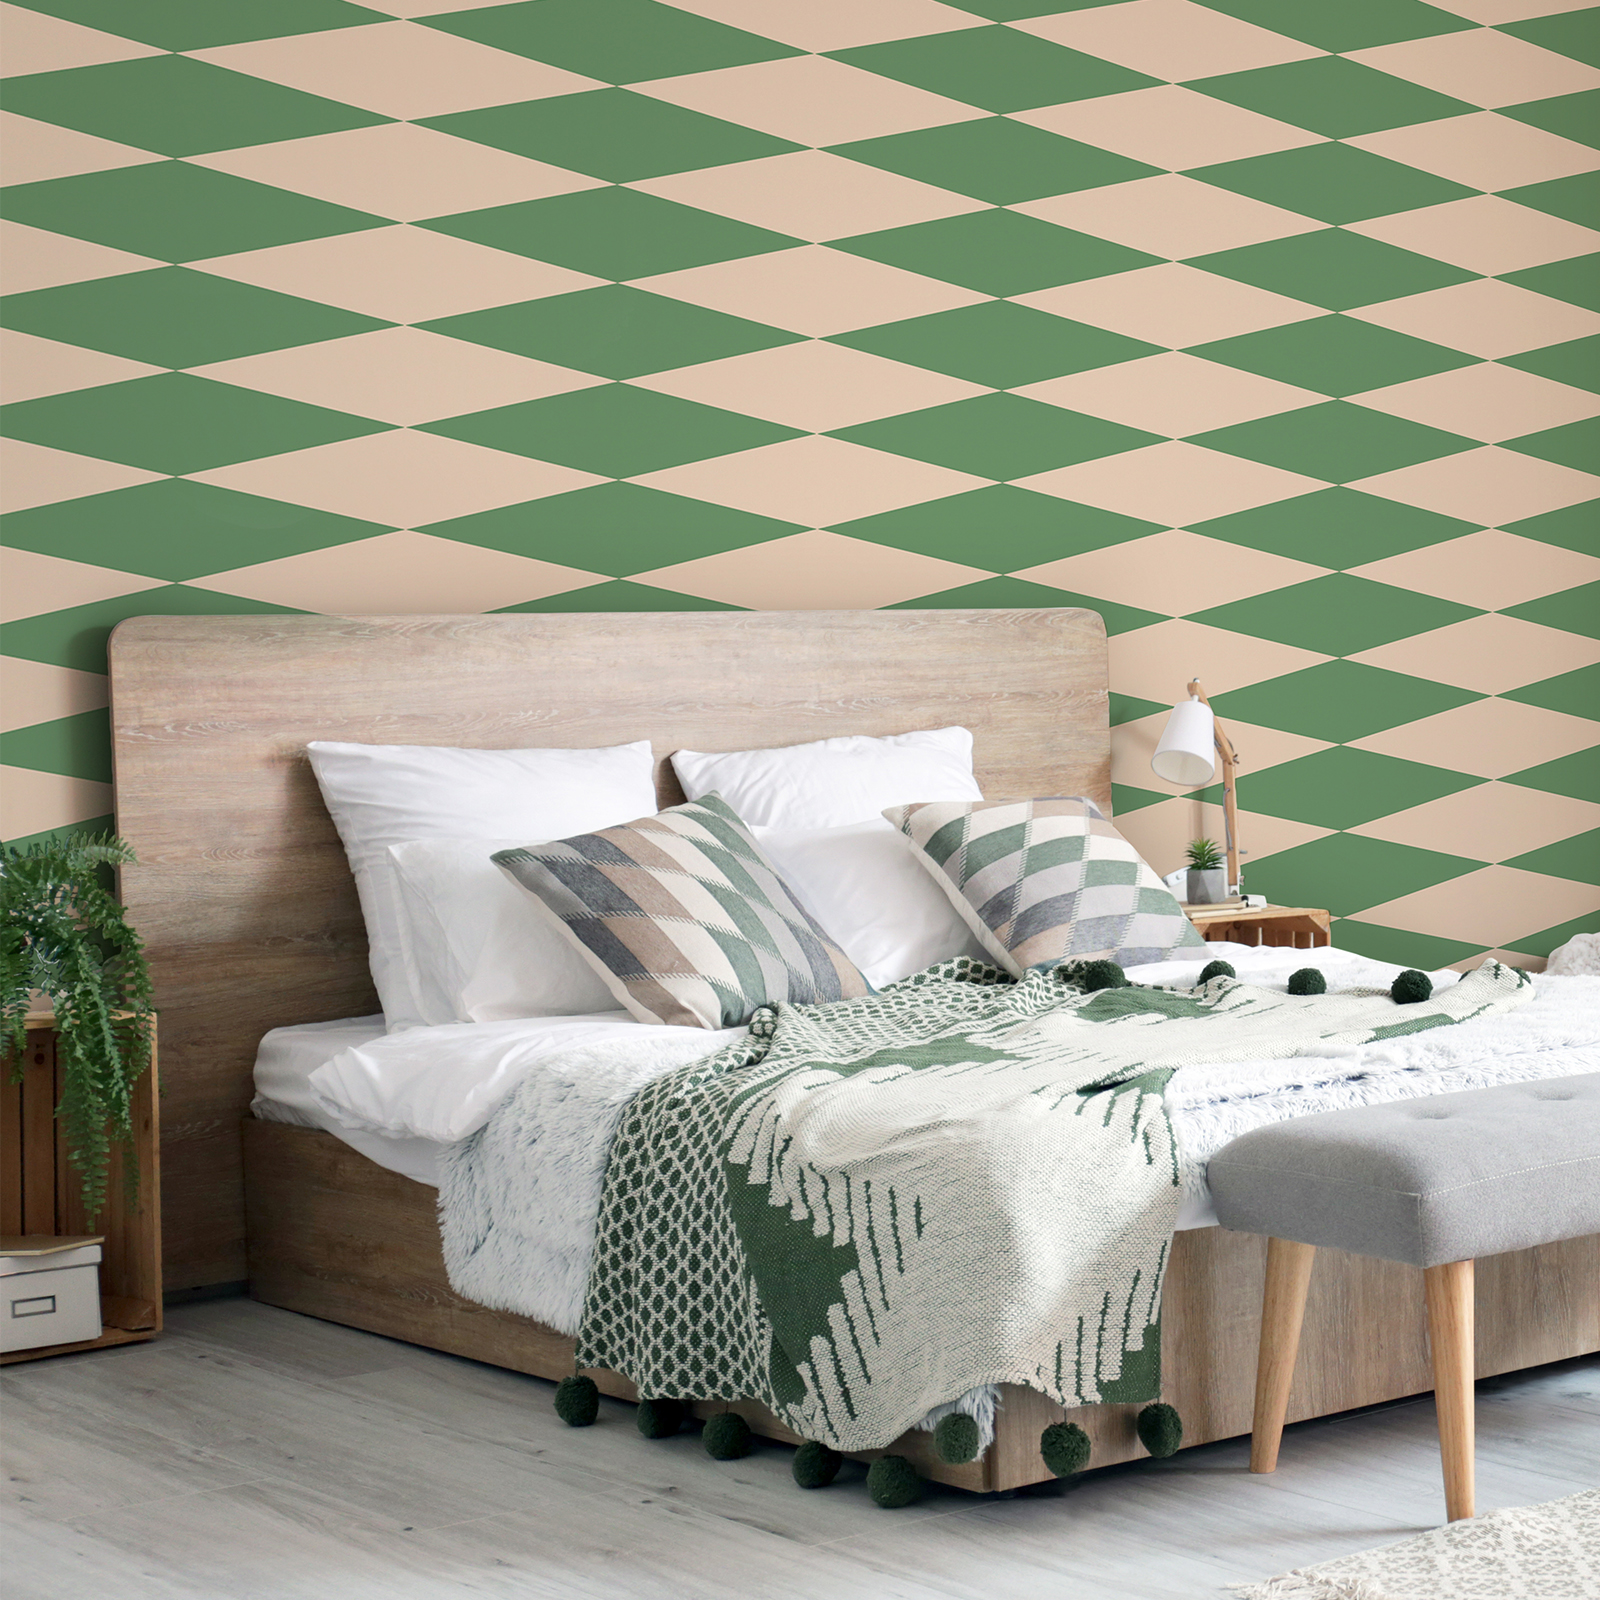 70s look diamond pattern wallpaper - Green, Beige | Matt smooth fleece
